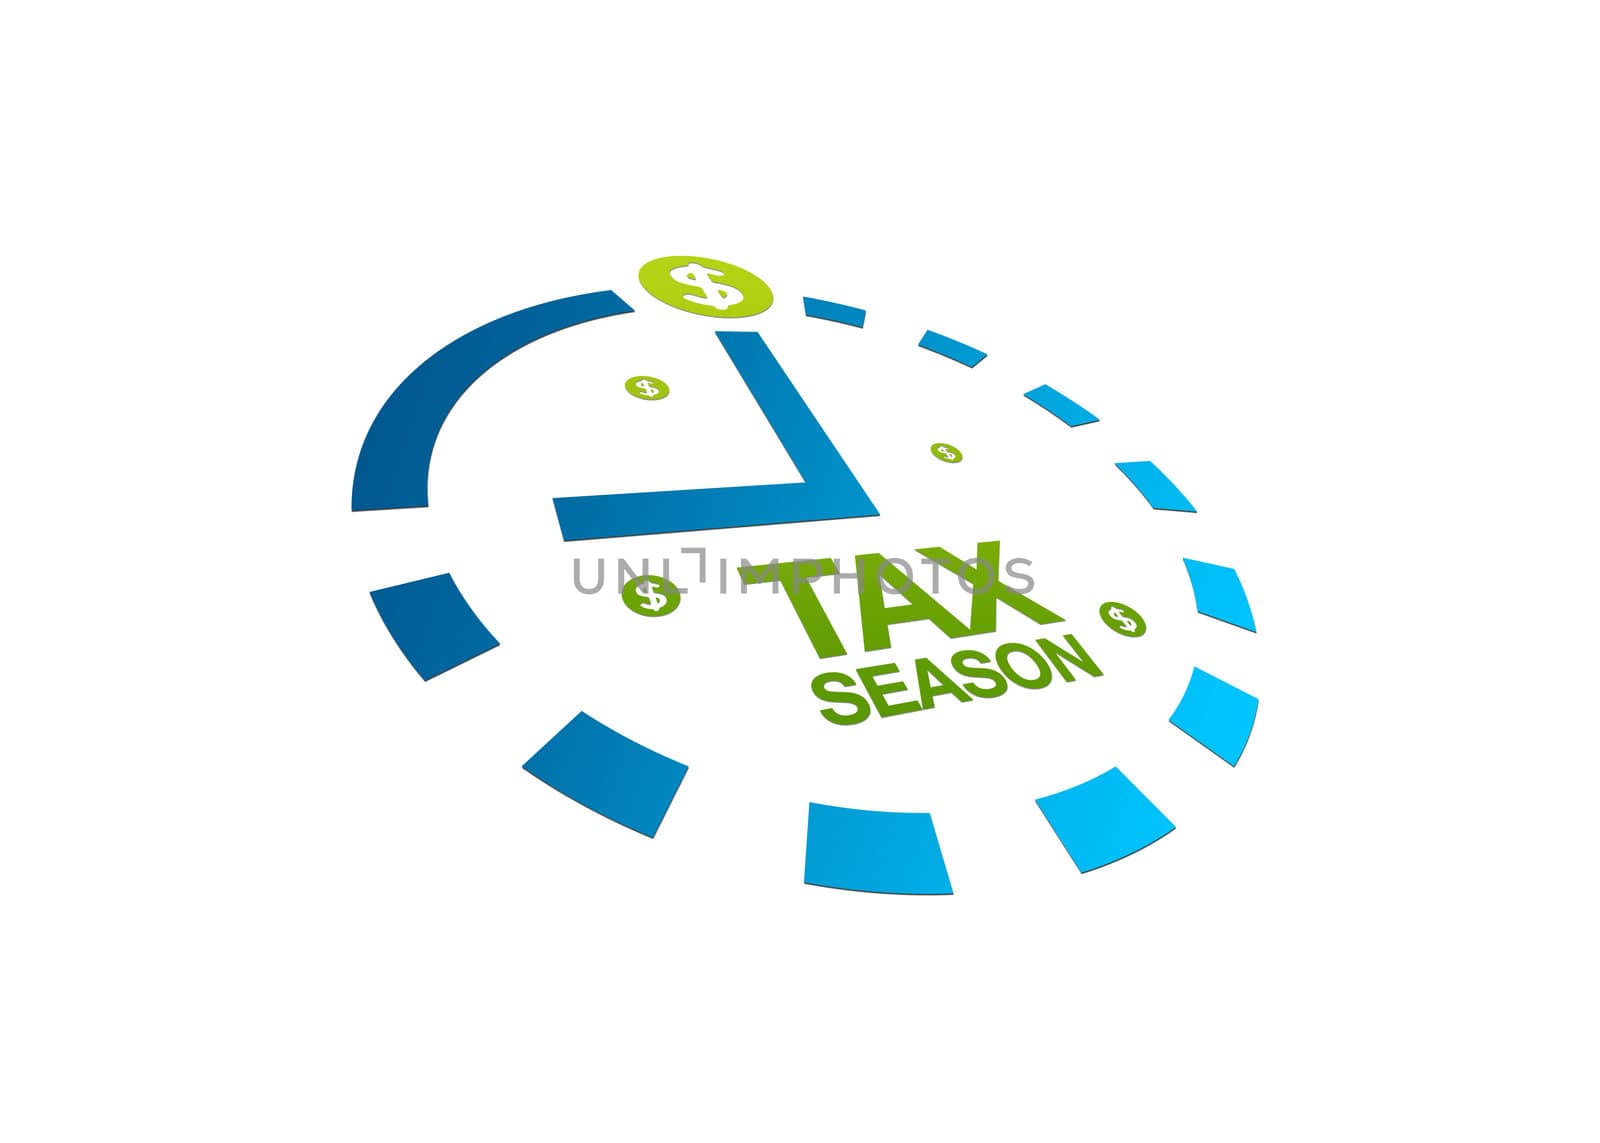 Perspective Tax Season by kbuntu